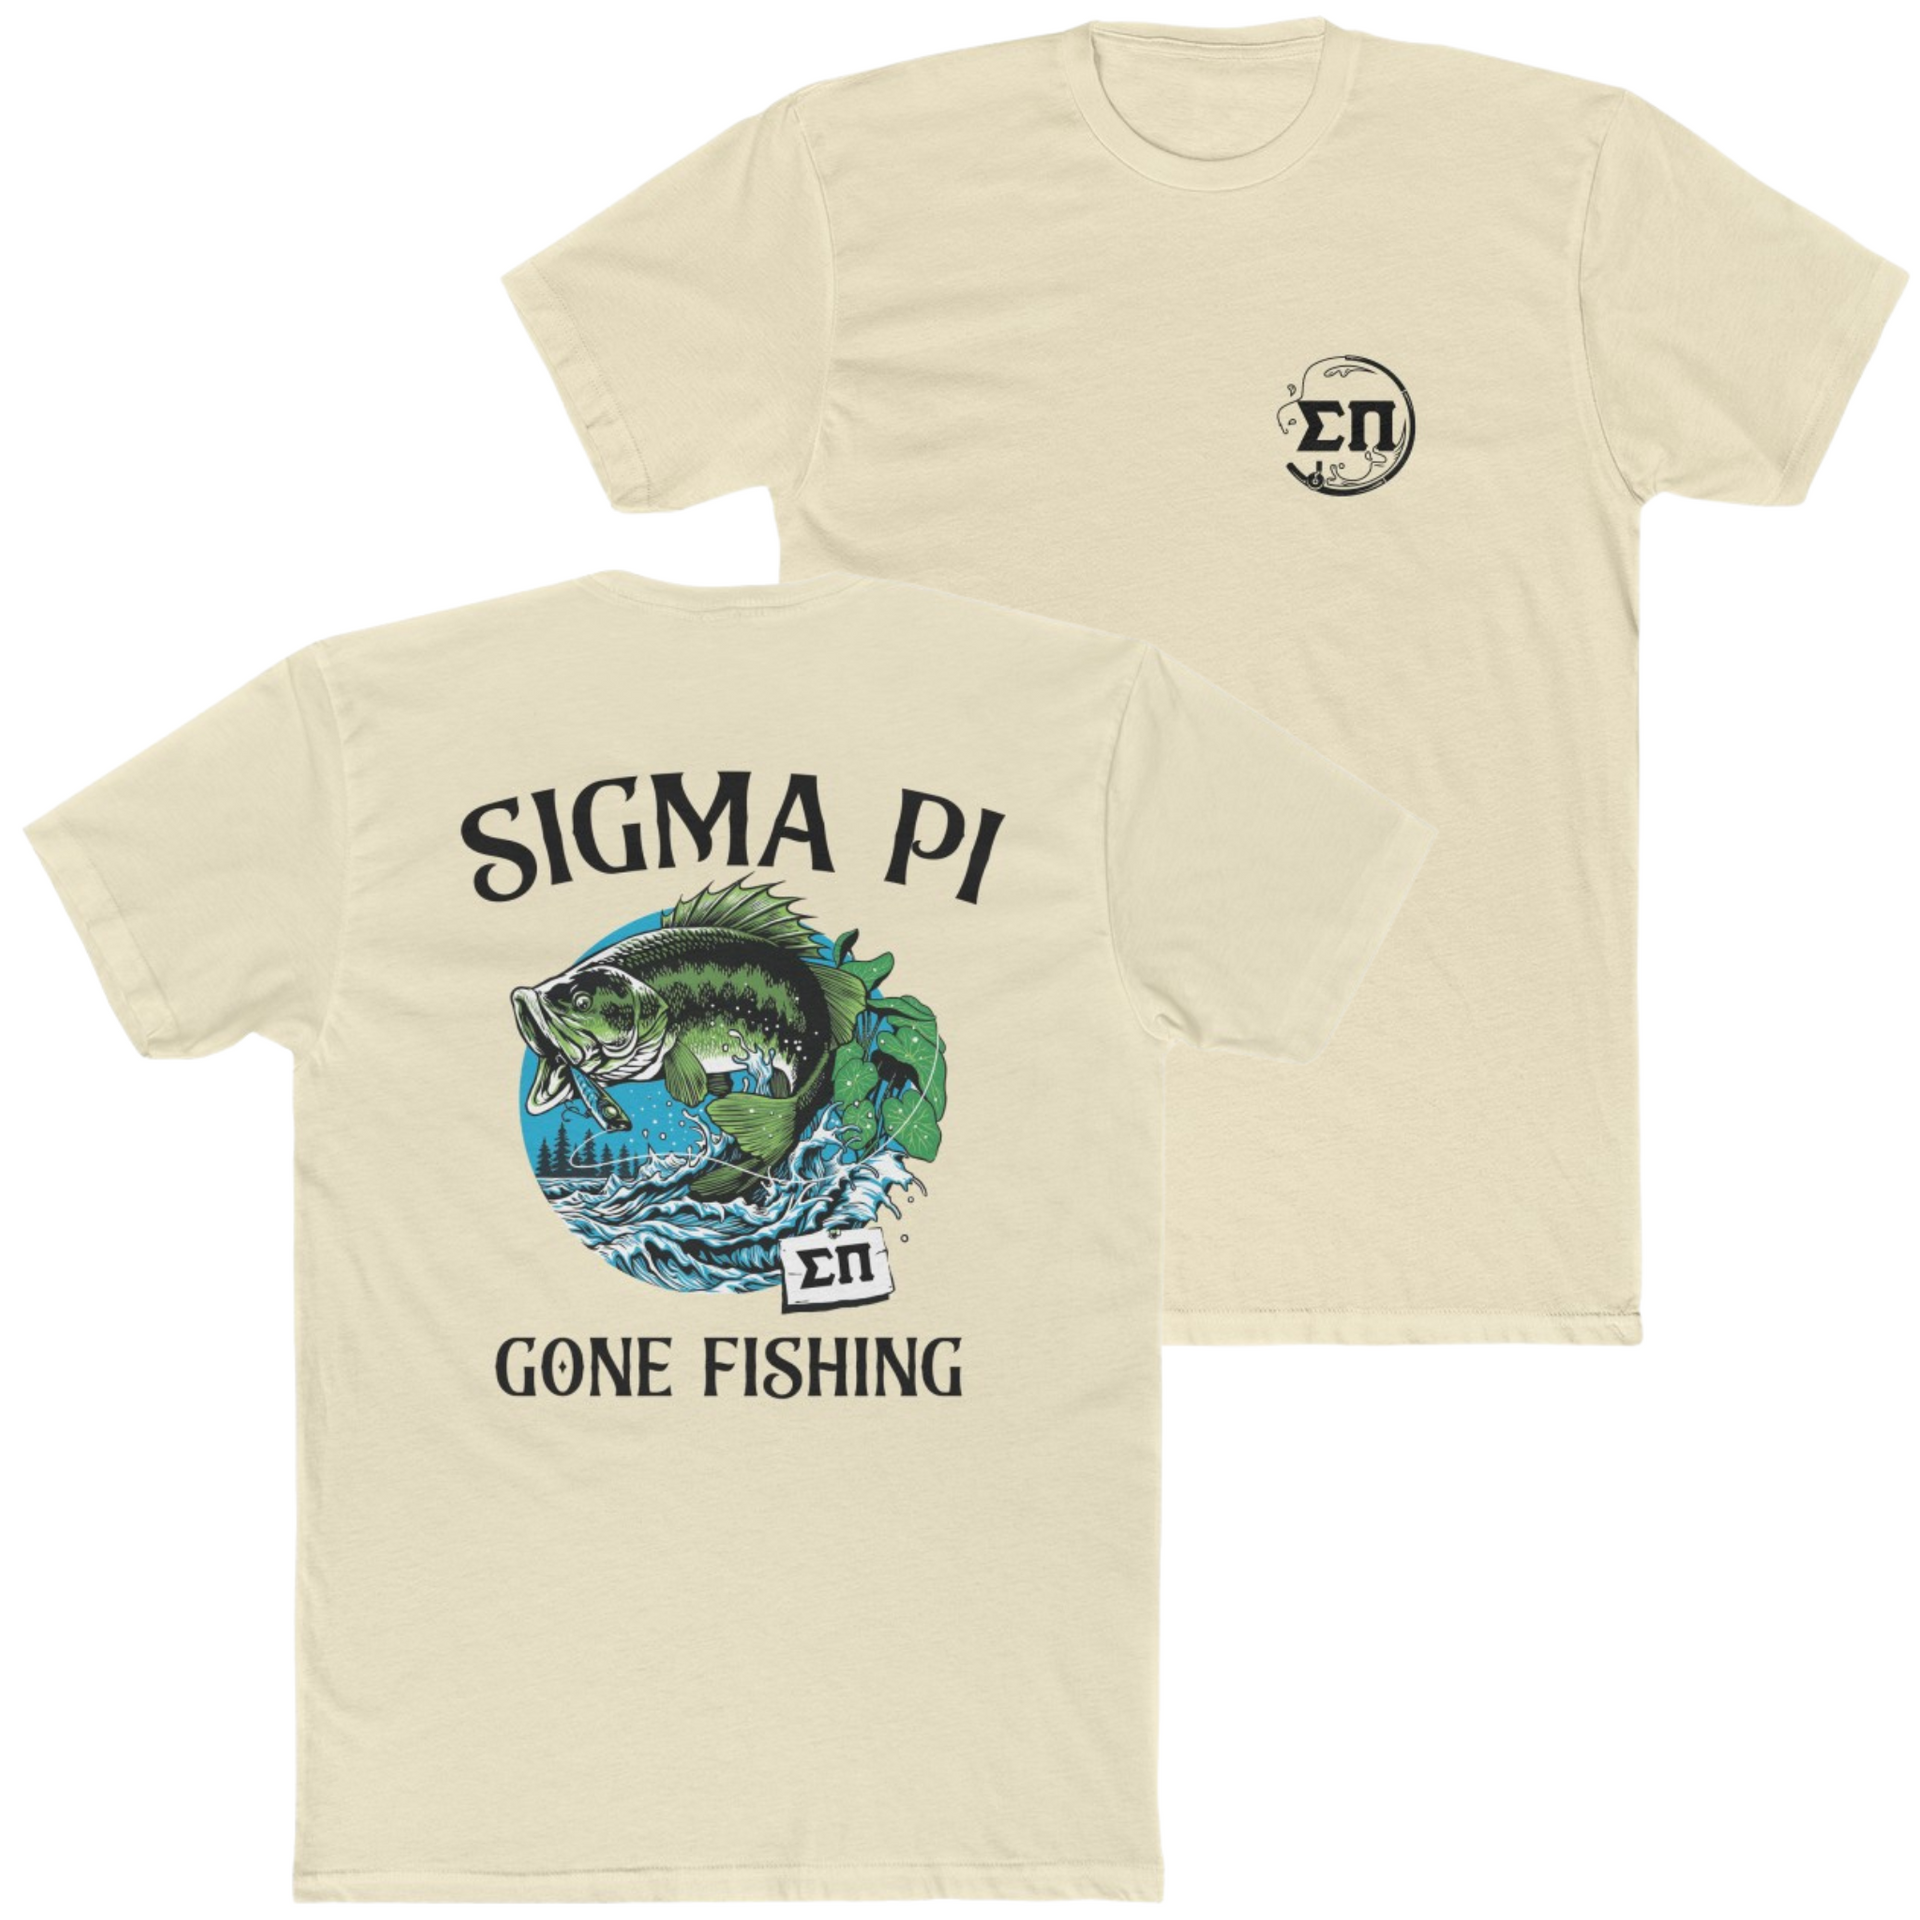 Sigma Pi Graphic T-Shirt | Gone Fishing